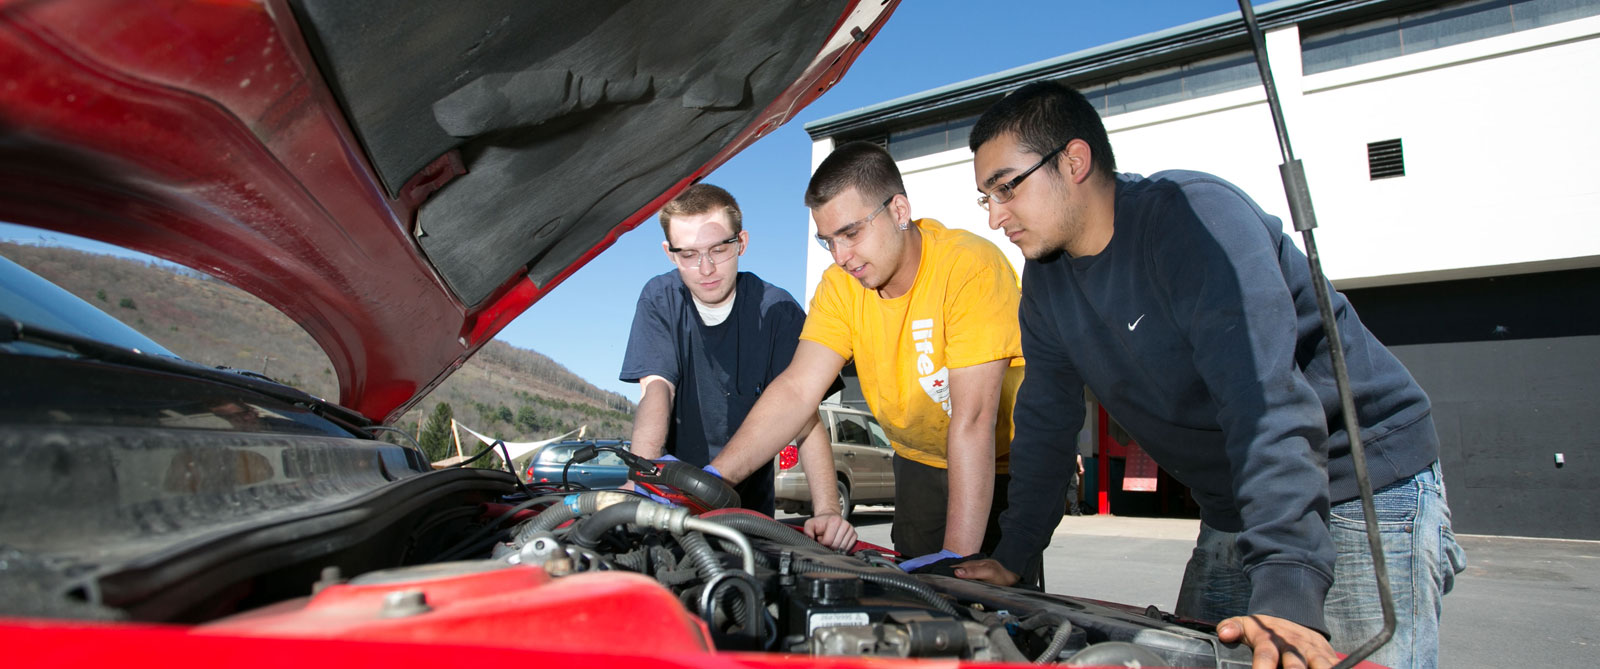 Three students working on car engine